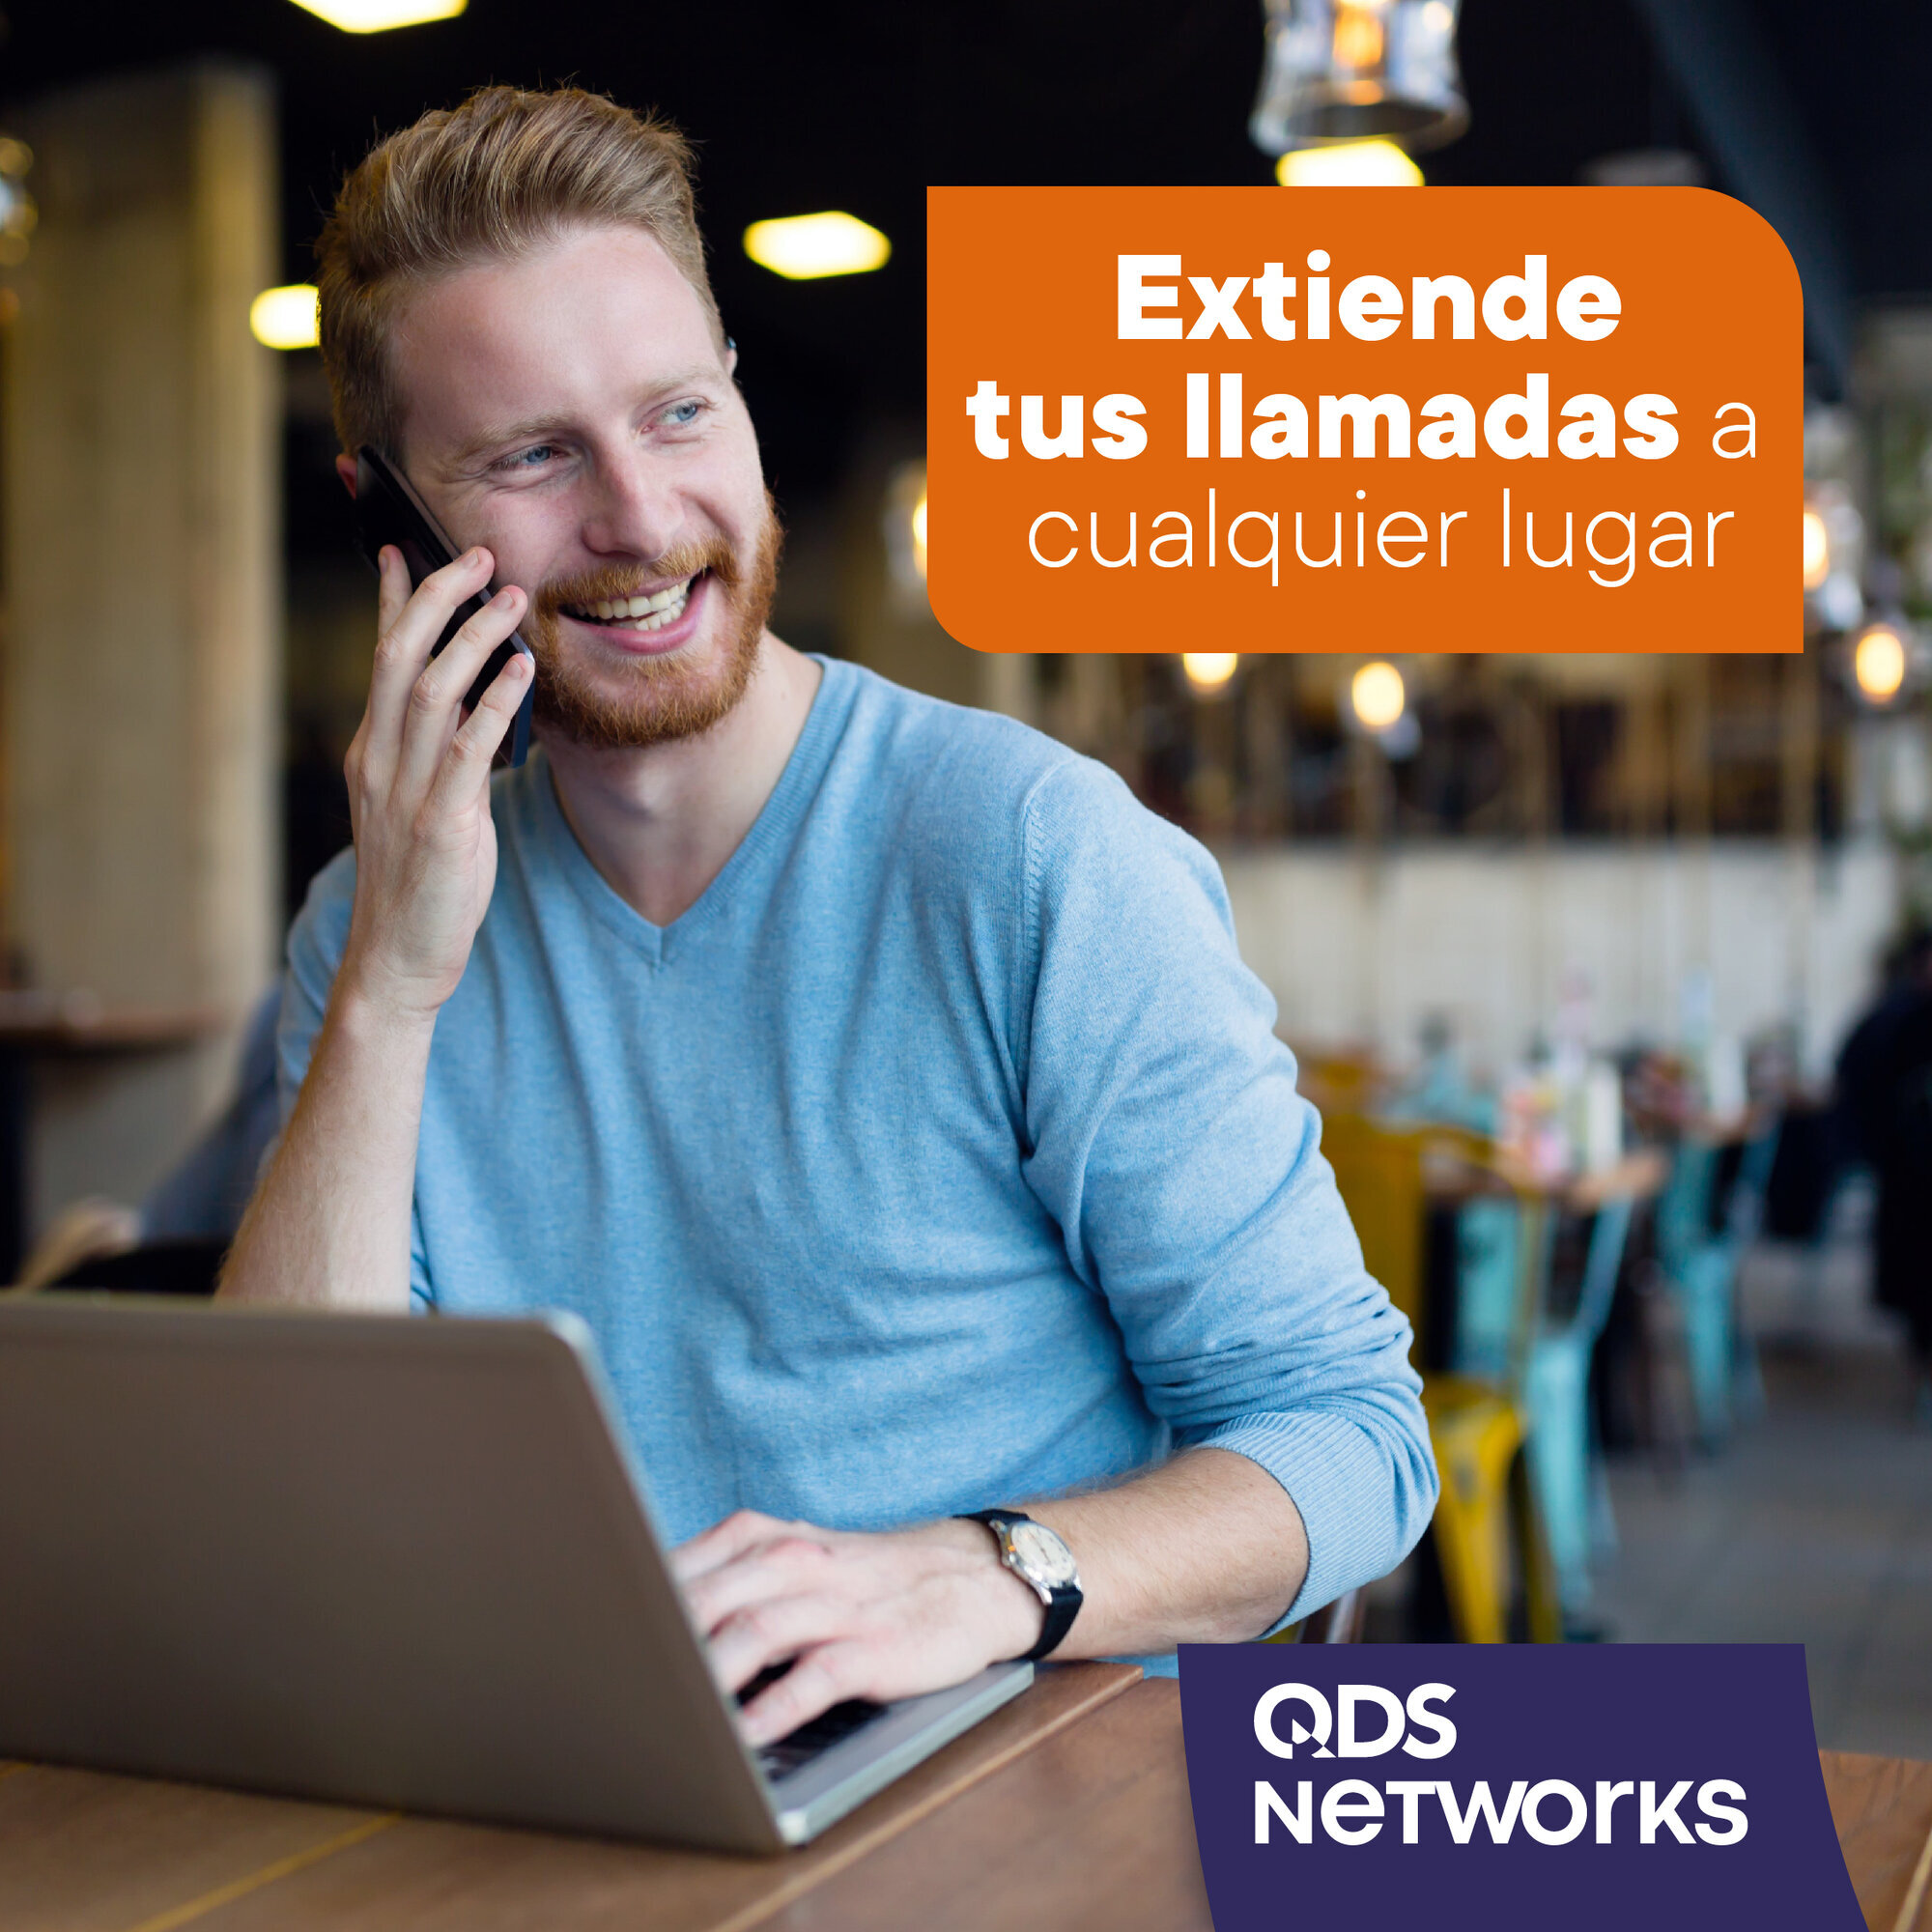 QDS Networks San Luis Potosí